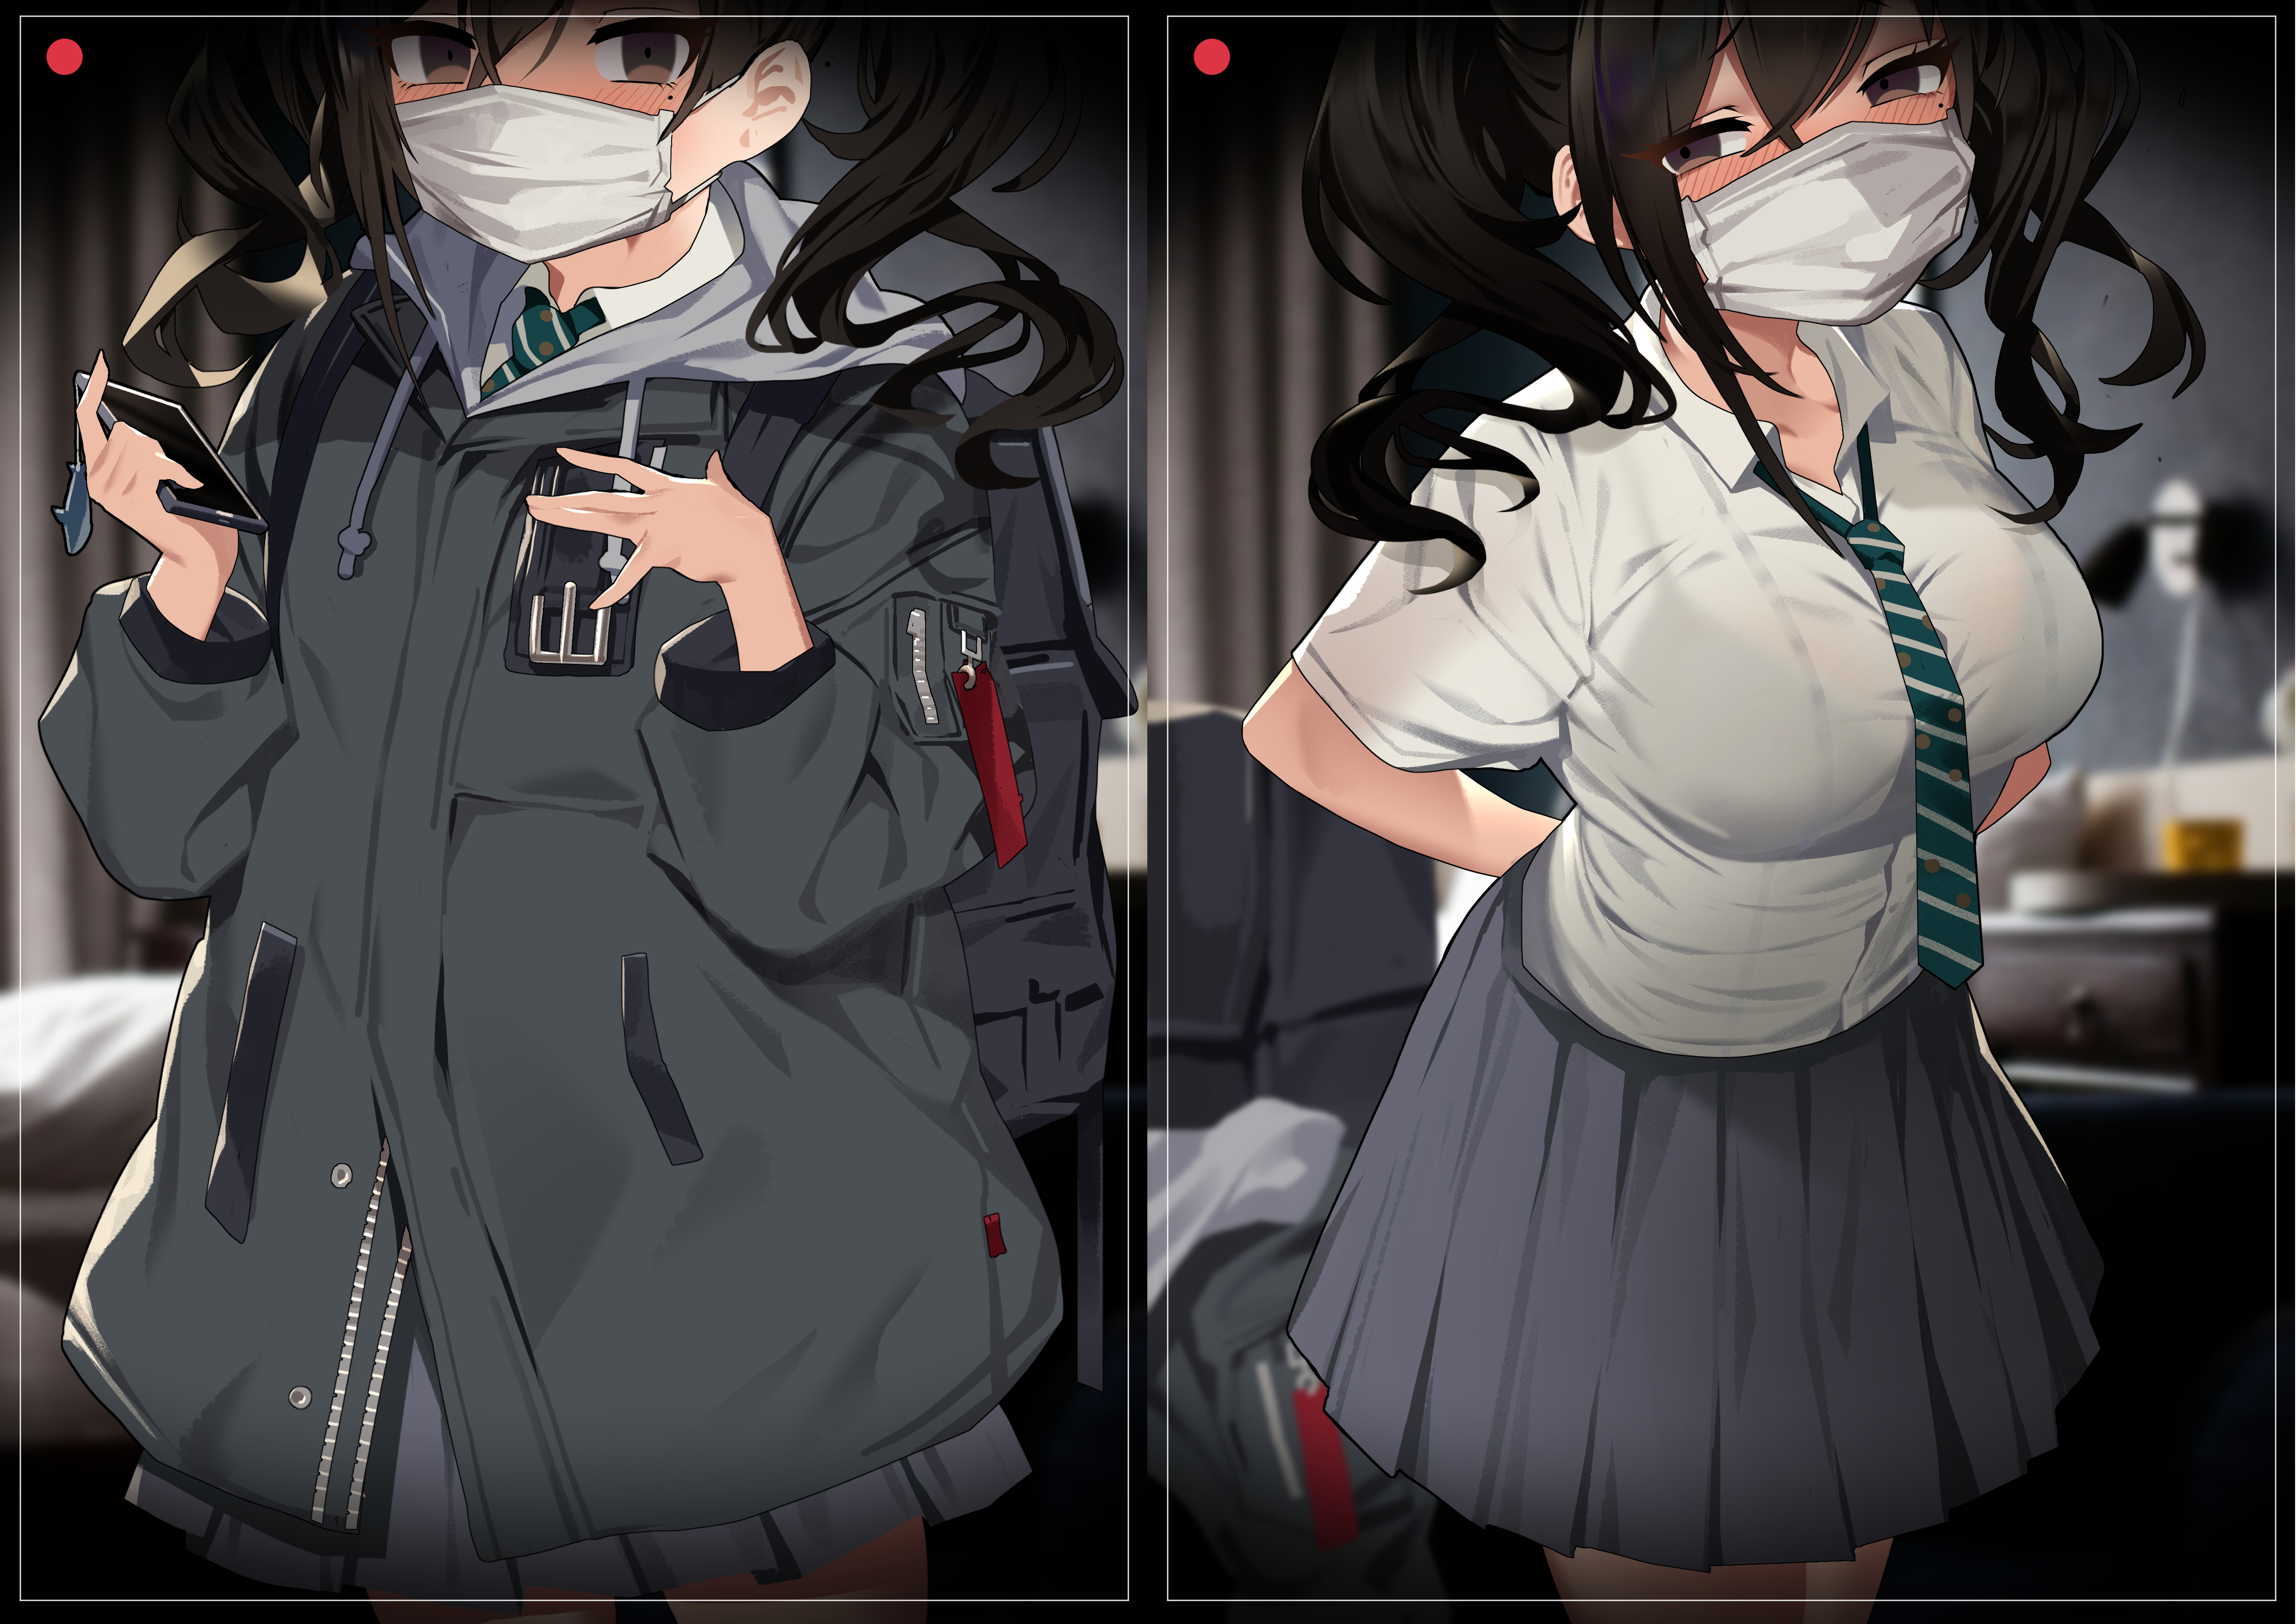 Anime 4961x3508 anime anime girls digital art artwork 2D portrait Bsue THE iDOLM@STER Sunazuka Akira face mask blushing dark hair twintails school uniform